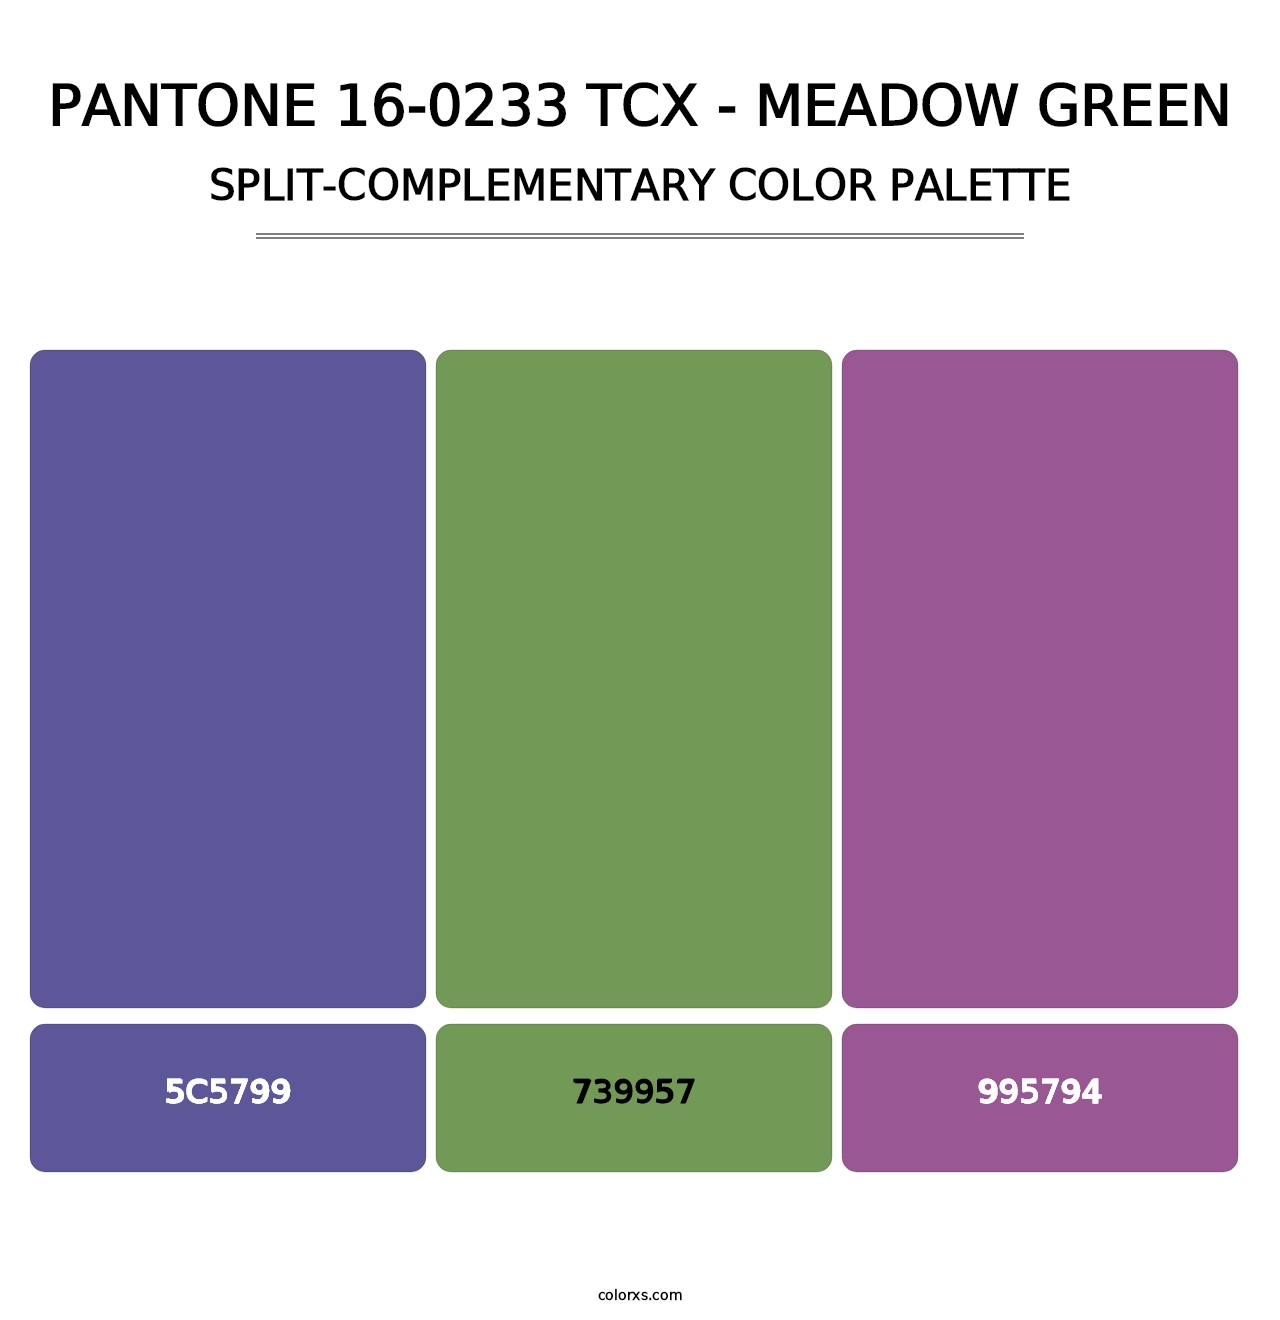 PANTONE 16-0233 TCX - Meadow Green - Split-Complementary Color Palette